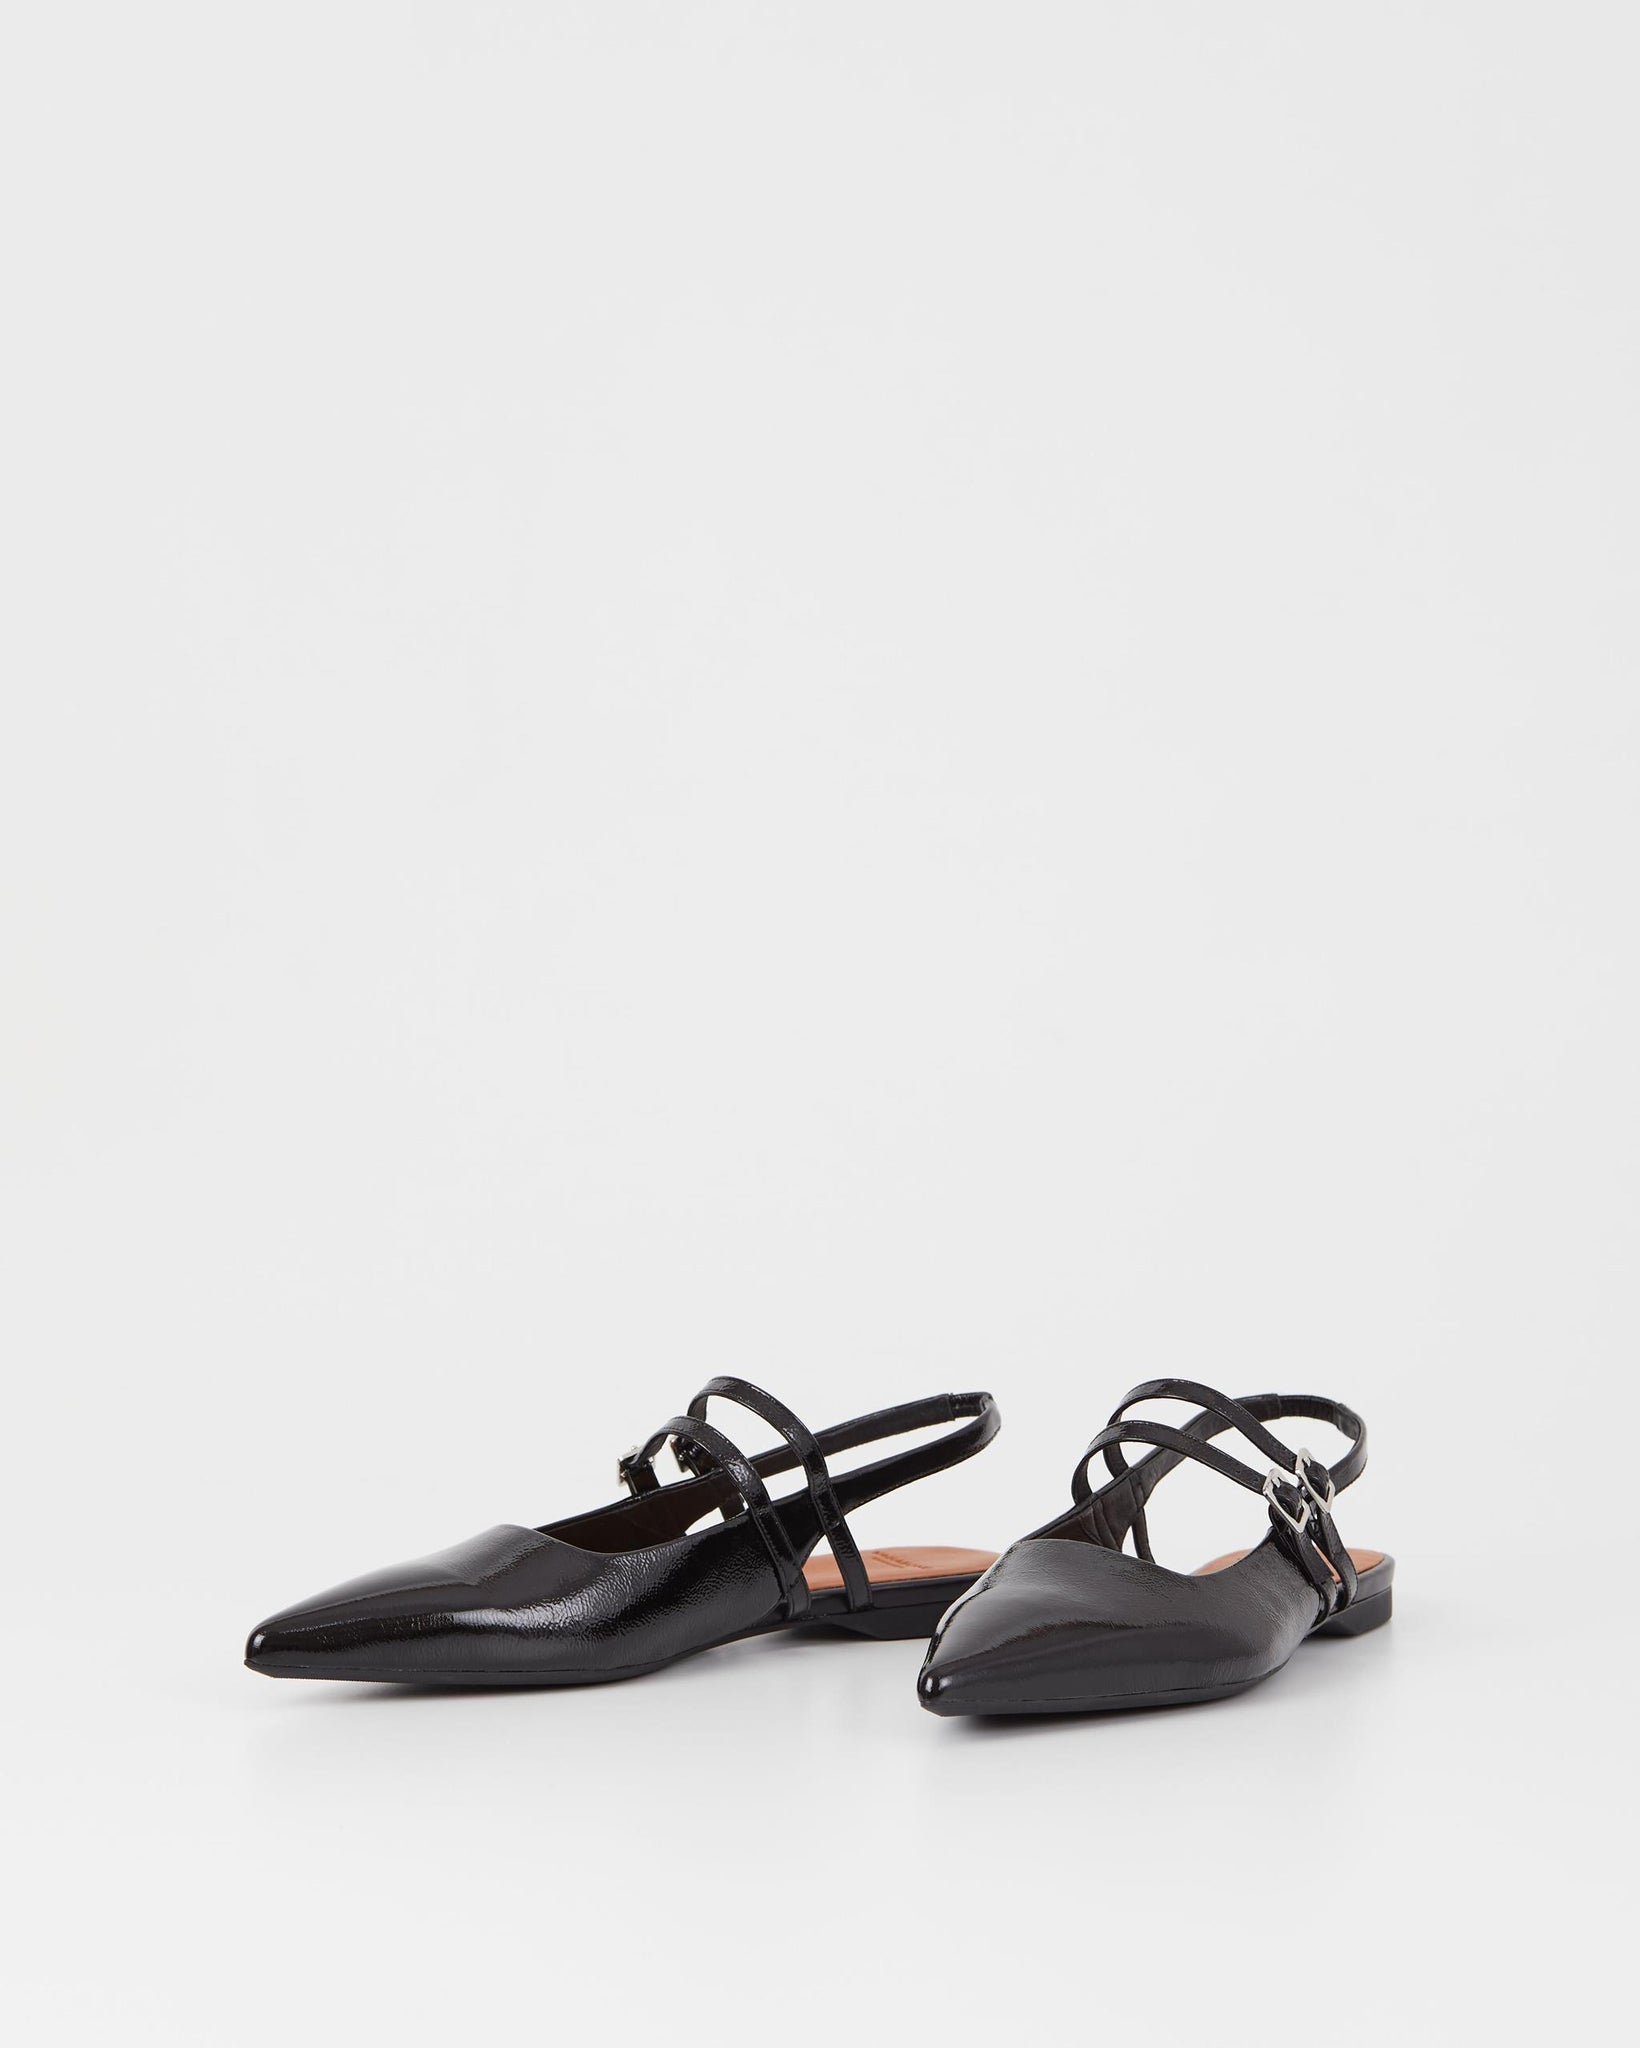 Zapatos Hermine (5733-260-20) - Negro Charol